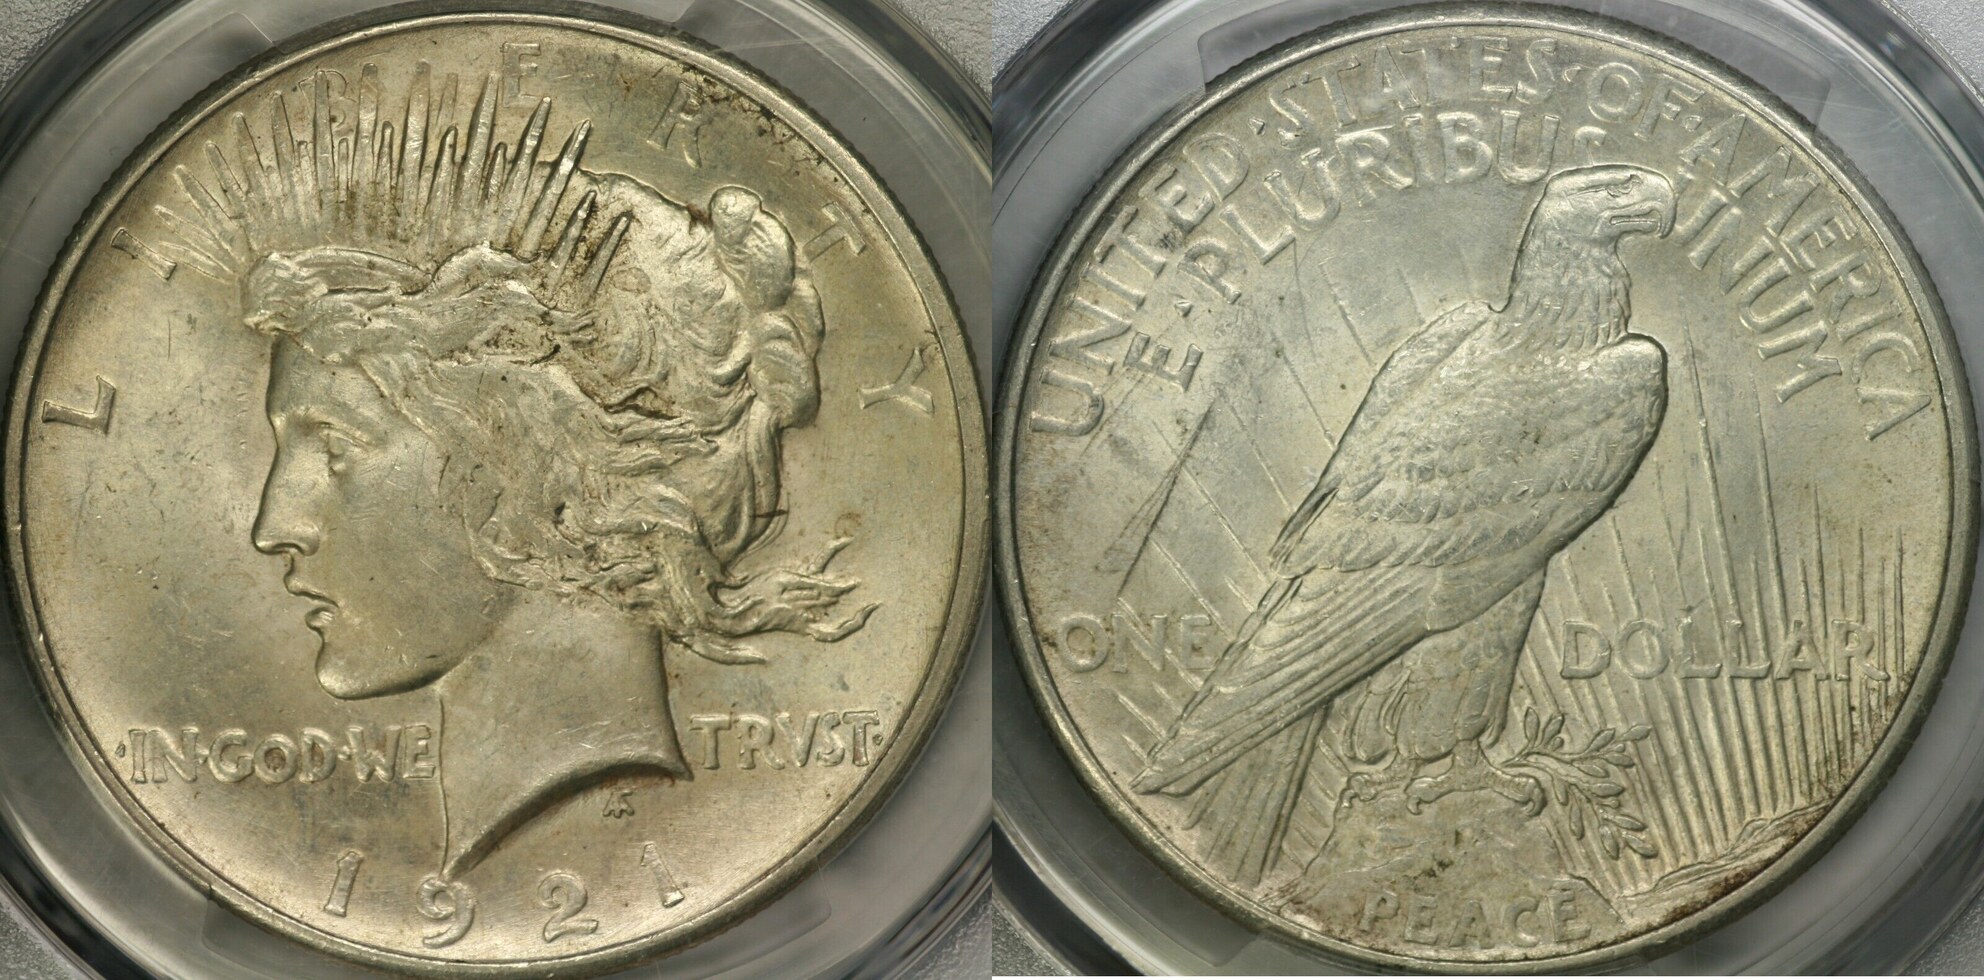 Peace Silver Dollar (1921-1935) Value